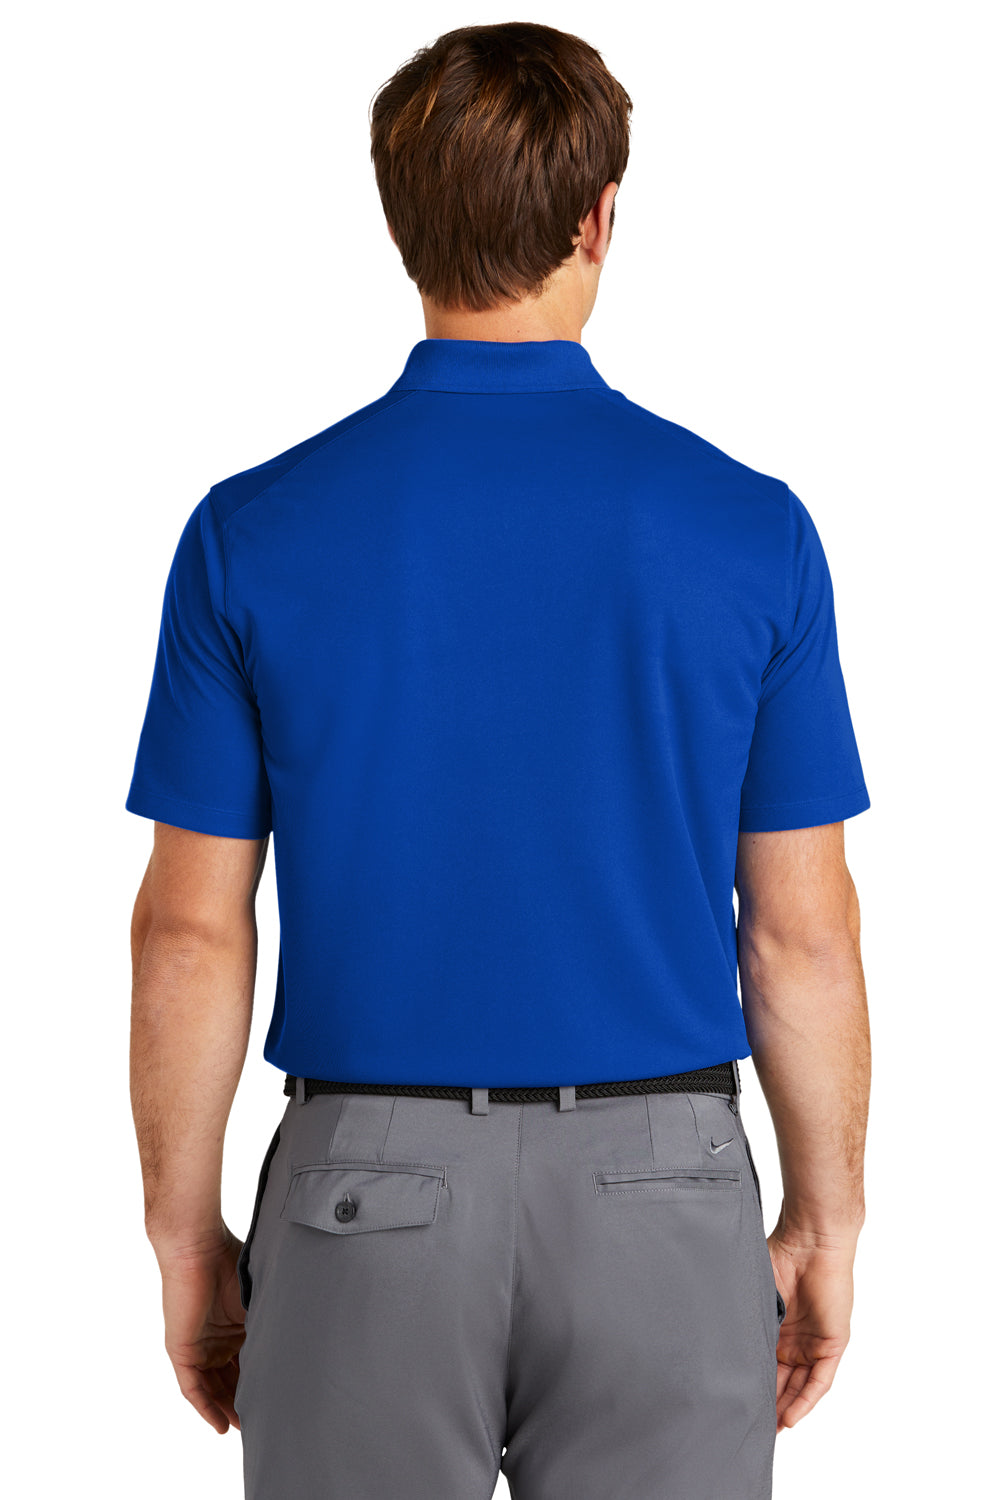 Nike NKDC2103 Mens Dri-Fit Moisture Wicking Micro Pique 2.0 Short Sleeve Polo Shirt w/ Pocket Game Royal Blue Model Back